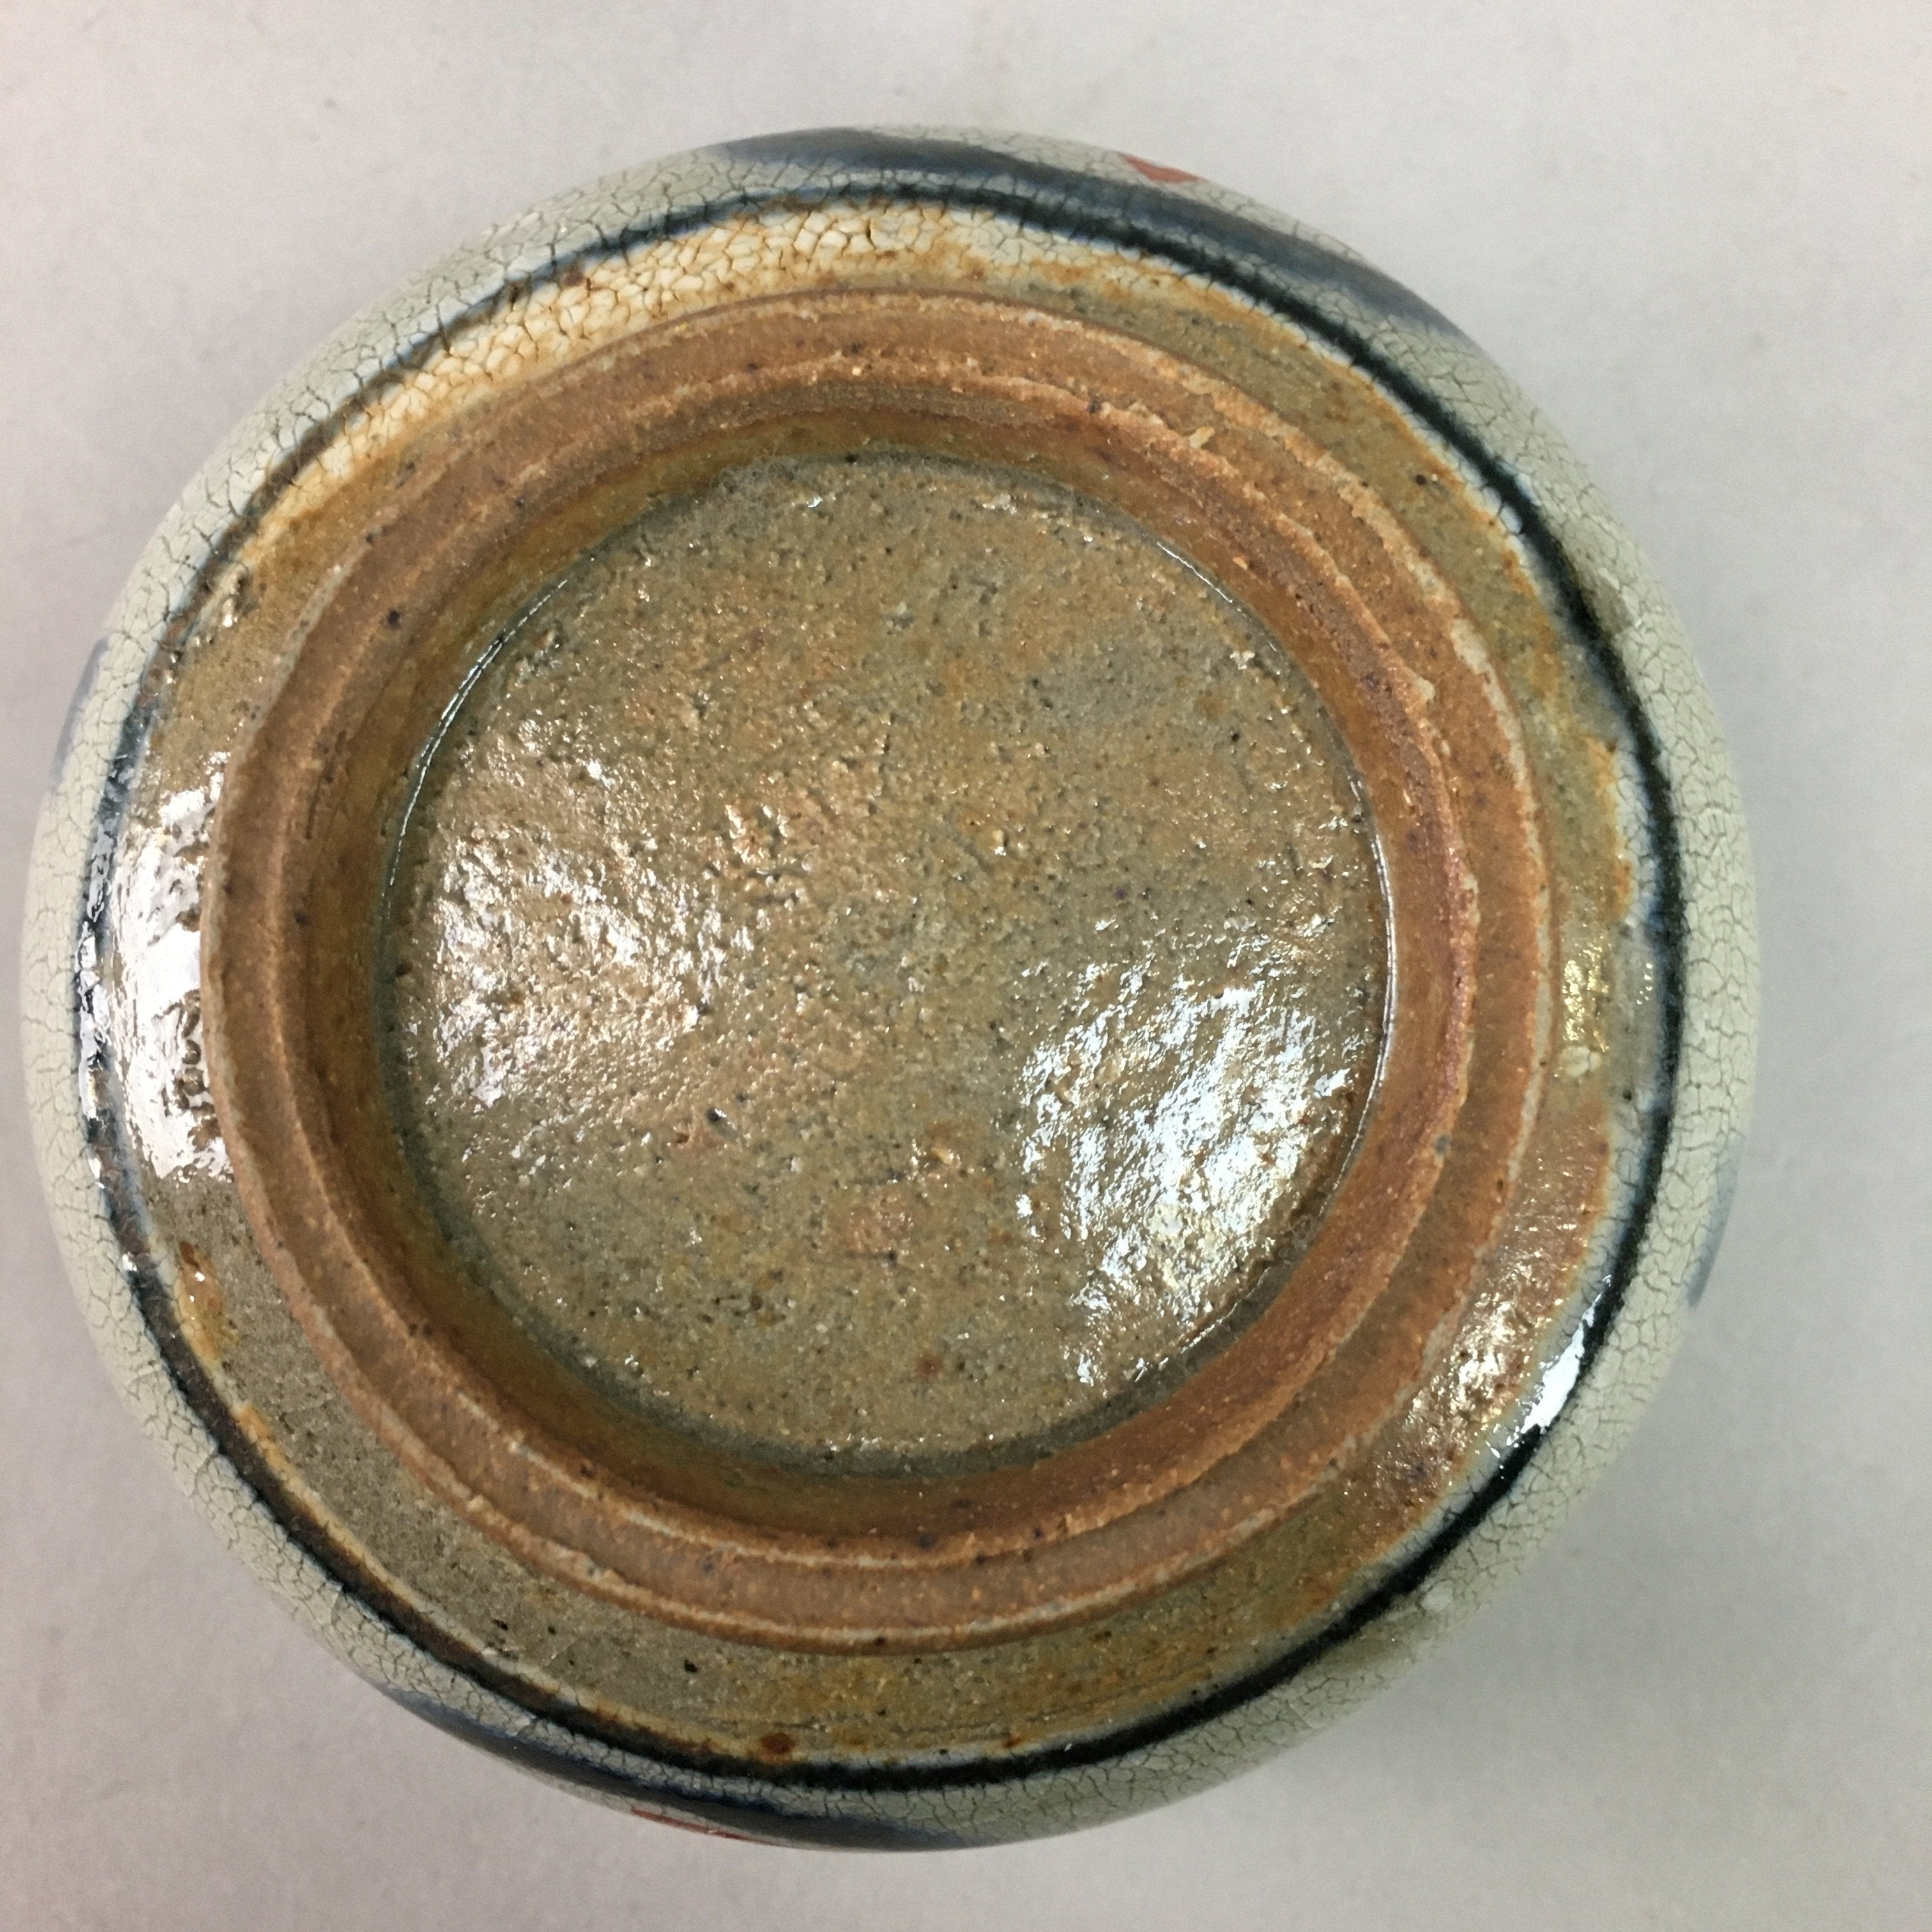 Japanese Ceramic Teacup Vtg Pottery Yunomi Crackle Glaze Kanji Sencha TC90